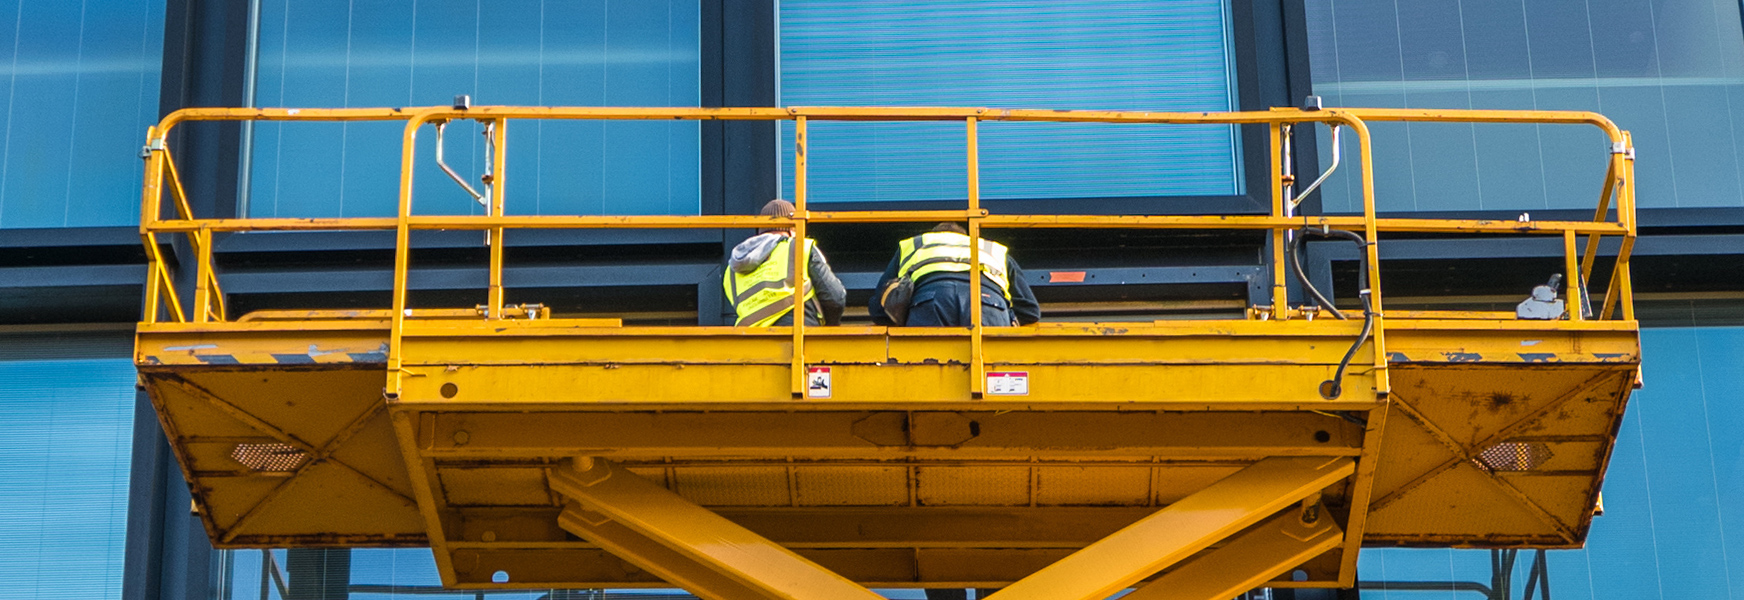 Workers in elevated work platform cleaning windows